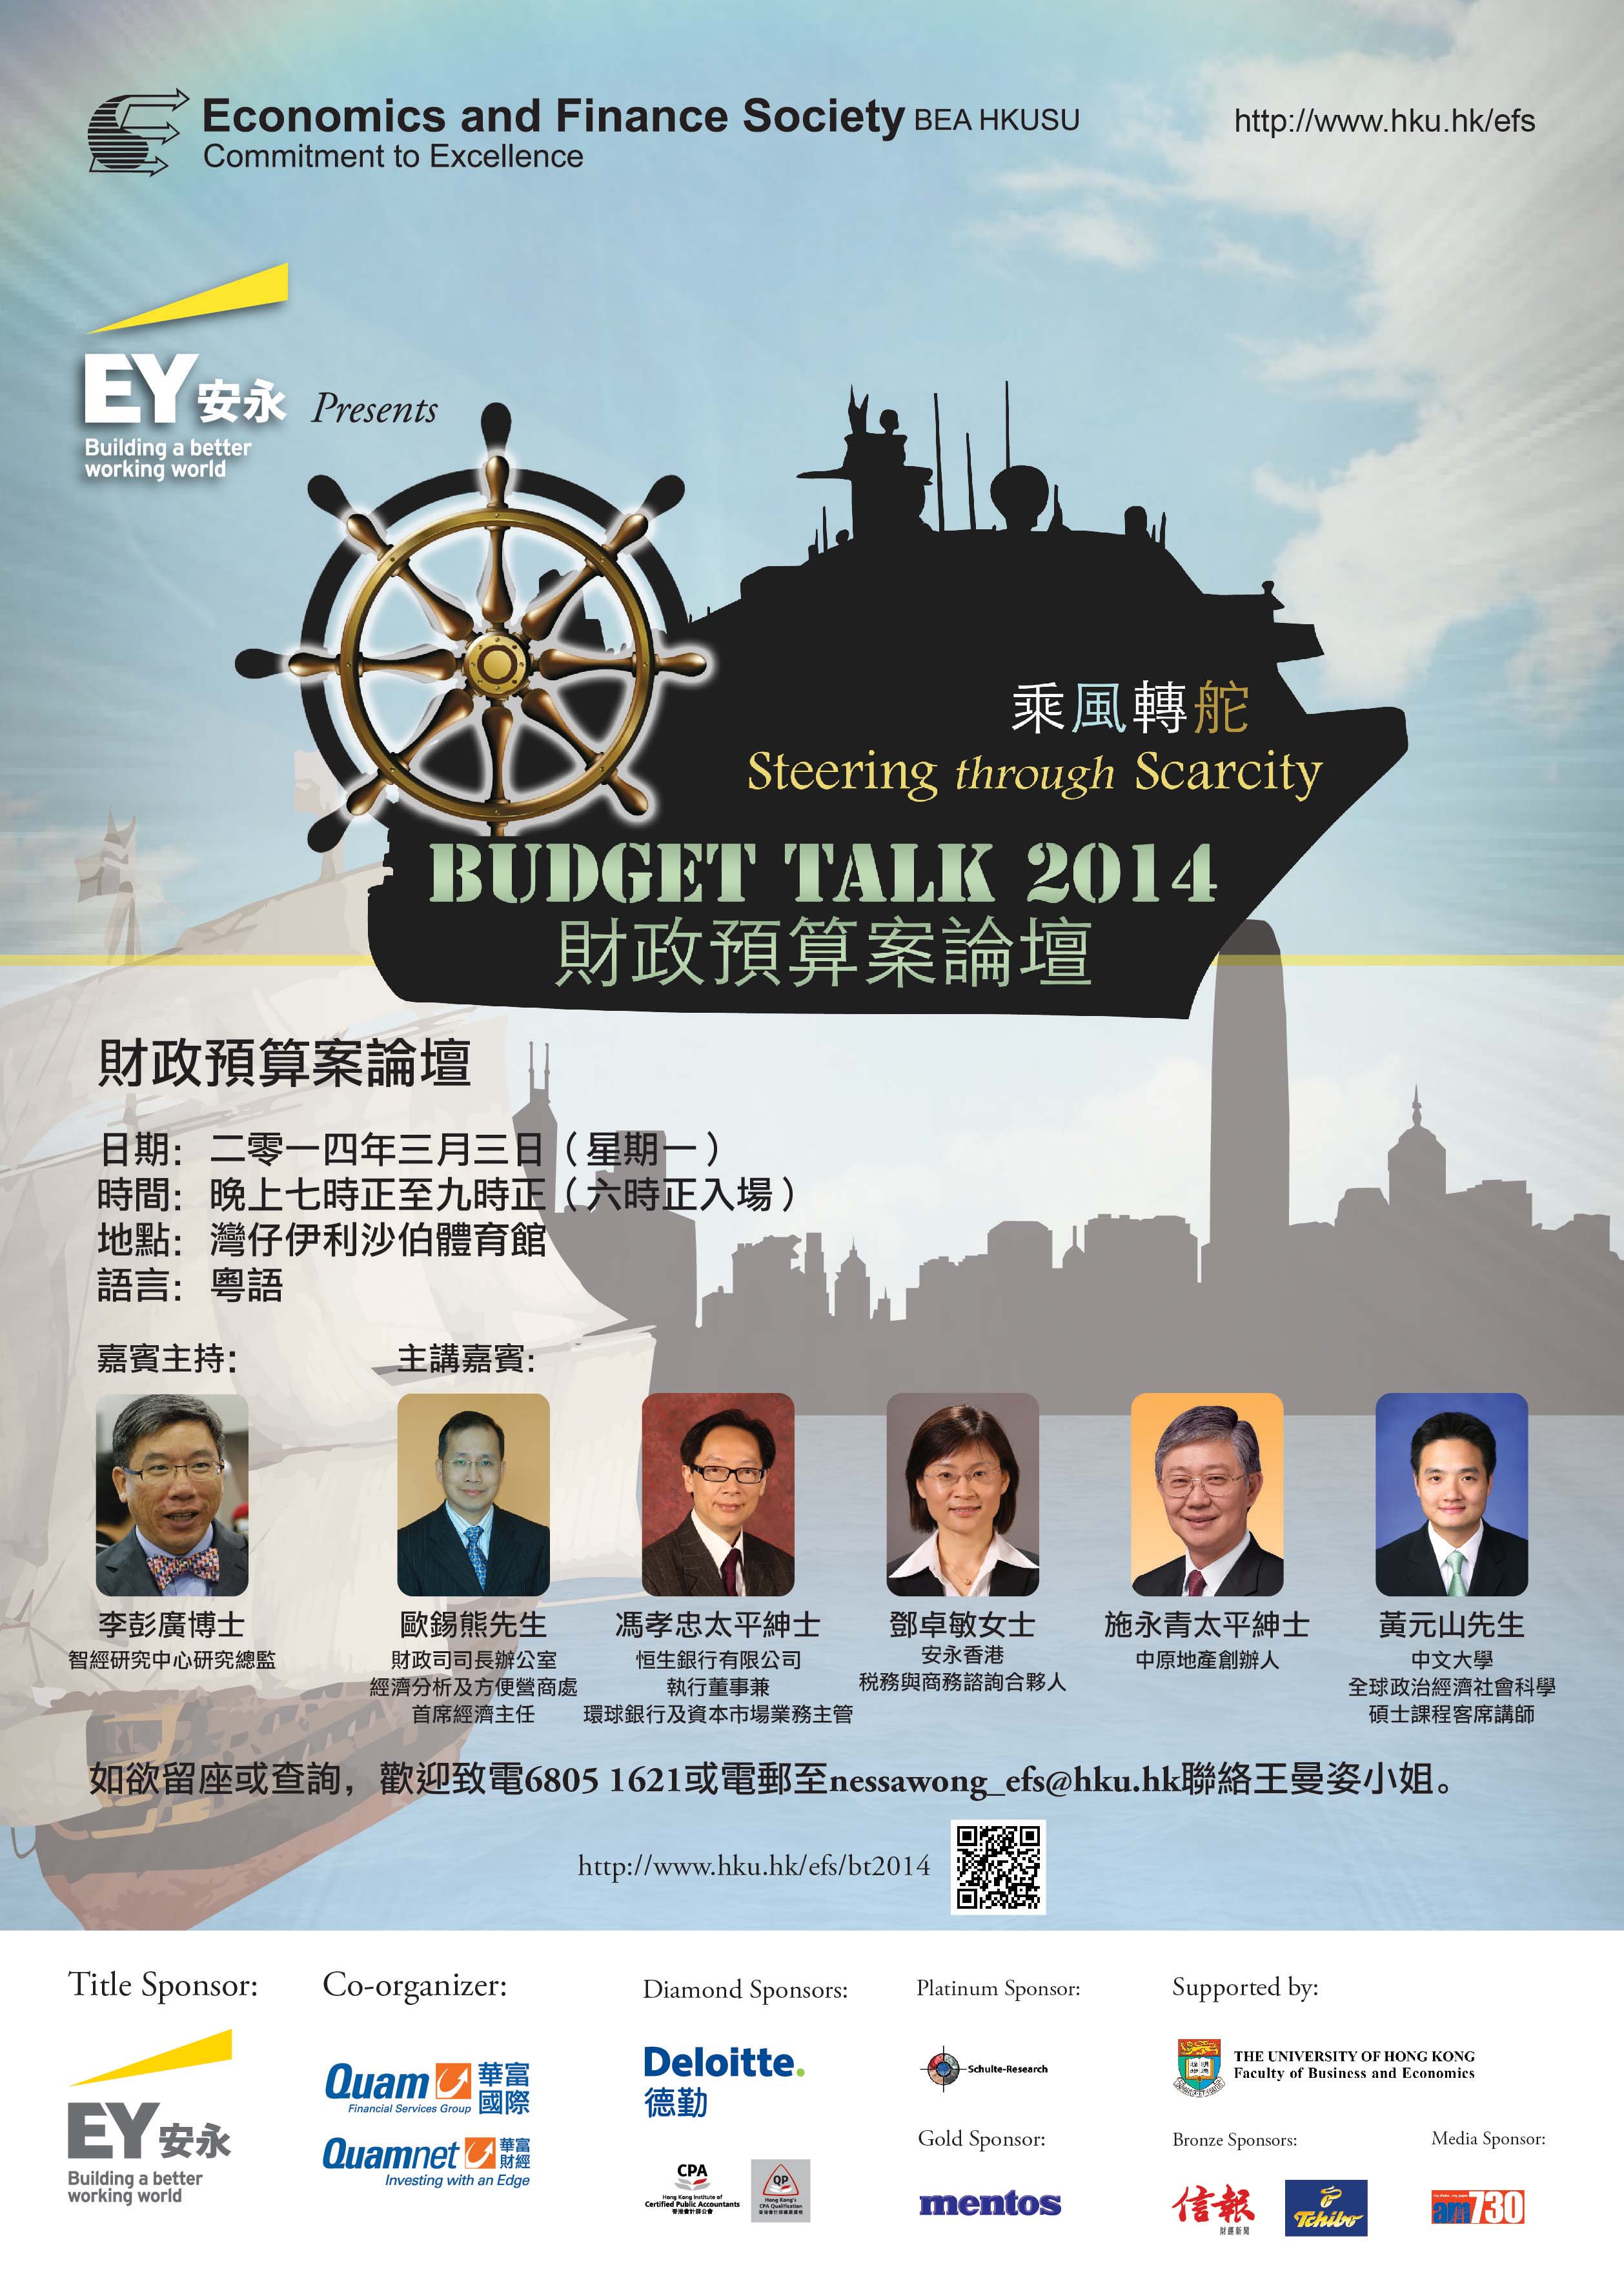 Economics and Finance Society BEA HKUSU - Budget Talk 2014